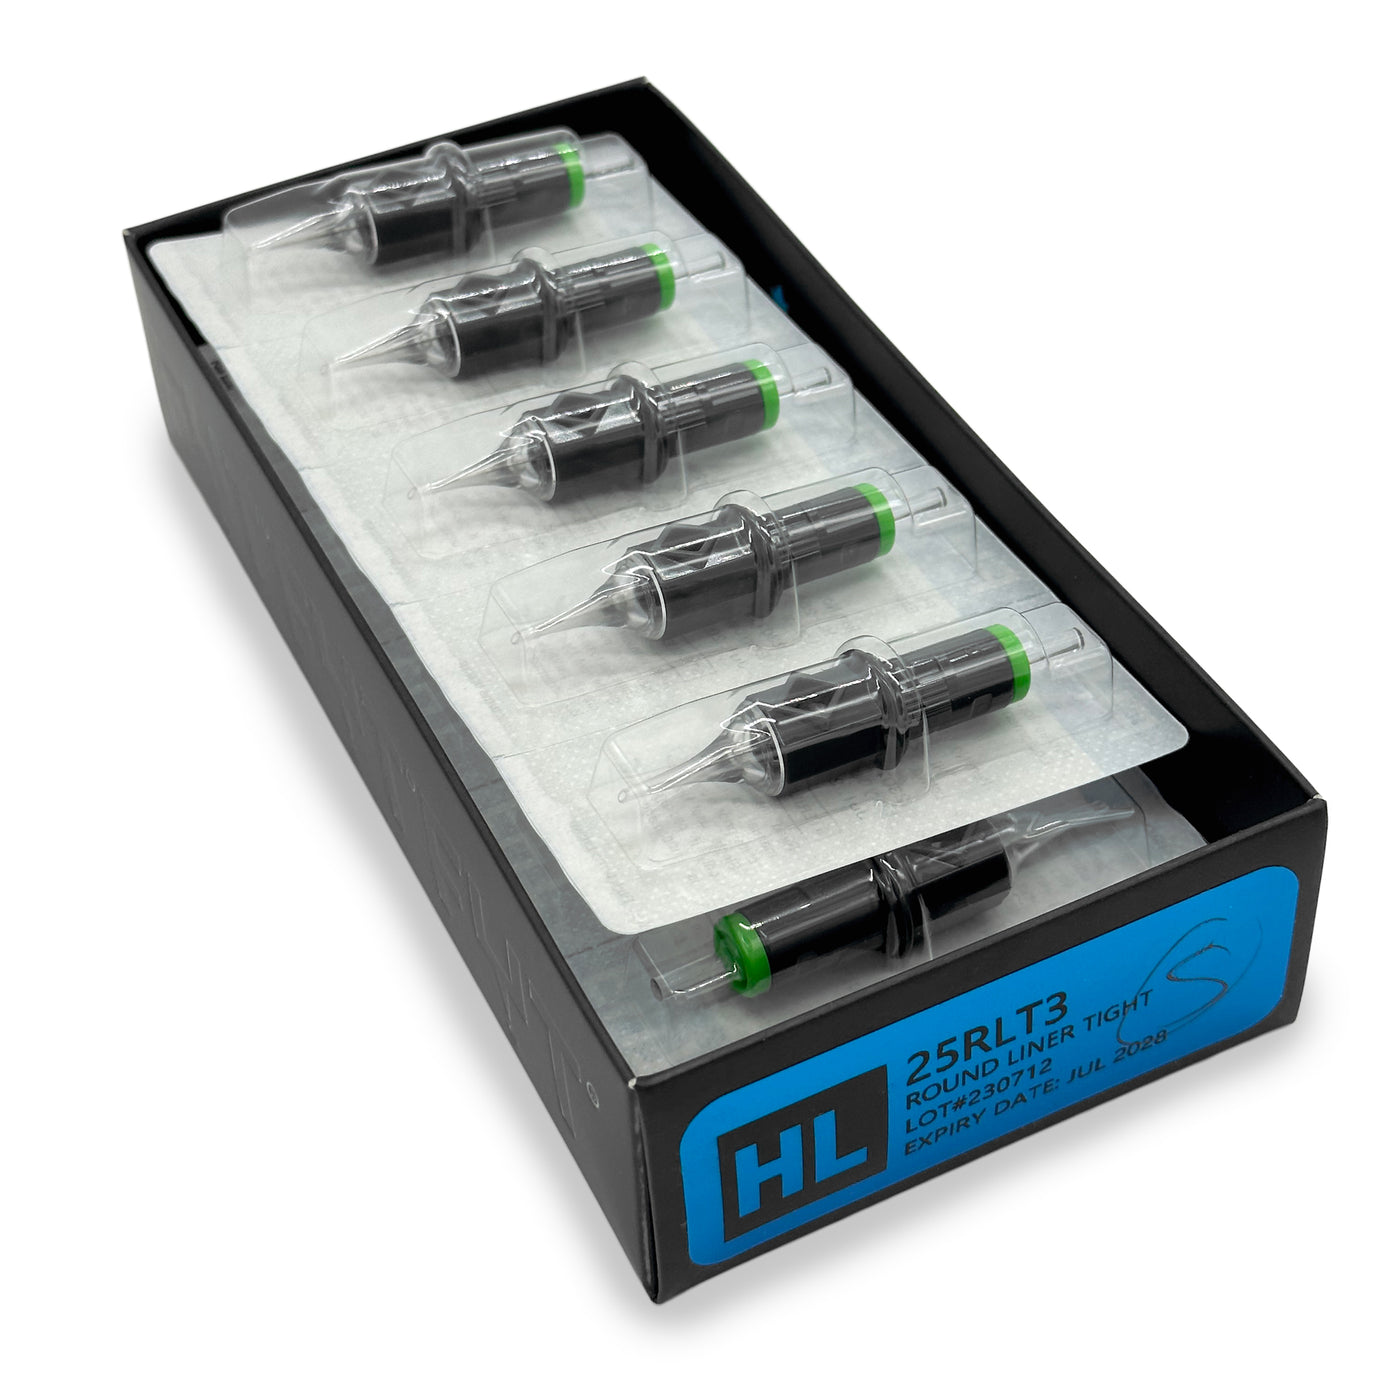 FYT Hardline SMP Cartridges - Taylor Perry Series - Cartridges - Pro Smp Supplies Inc